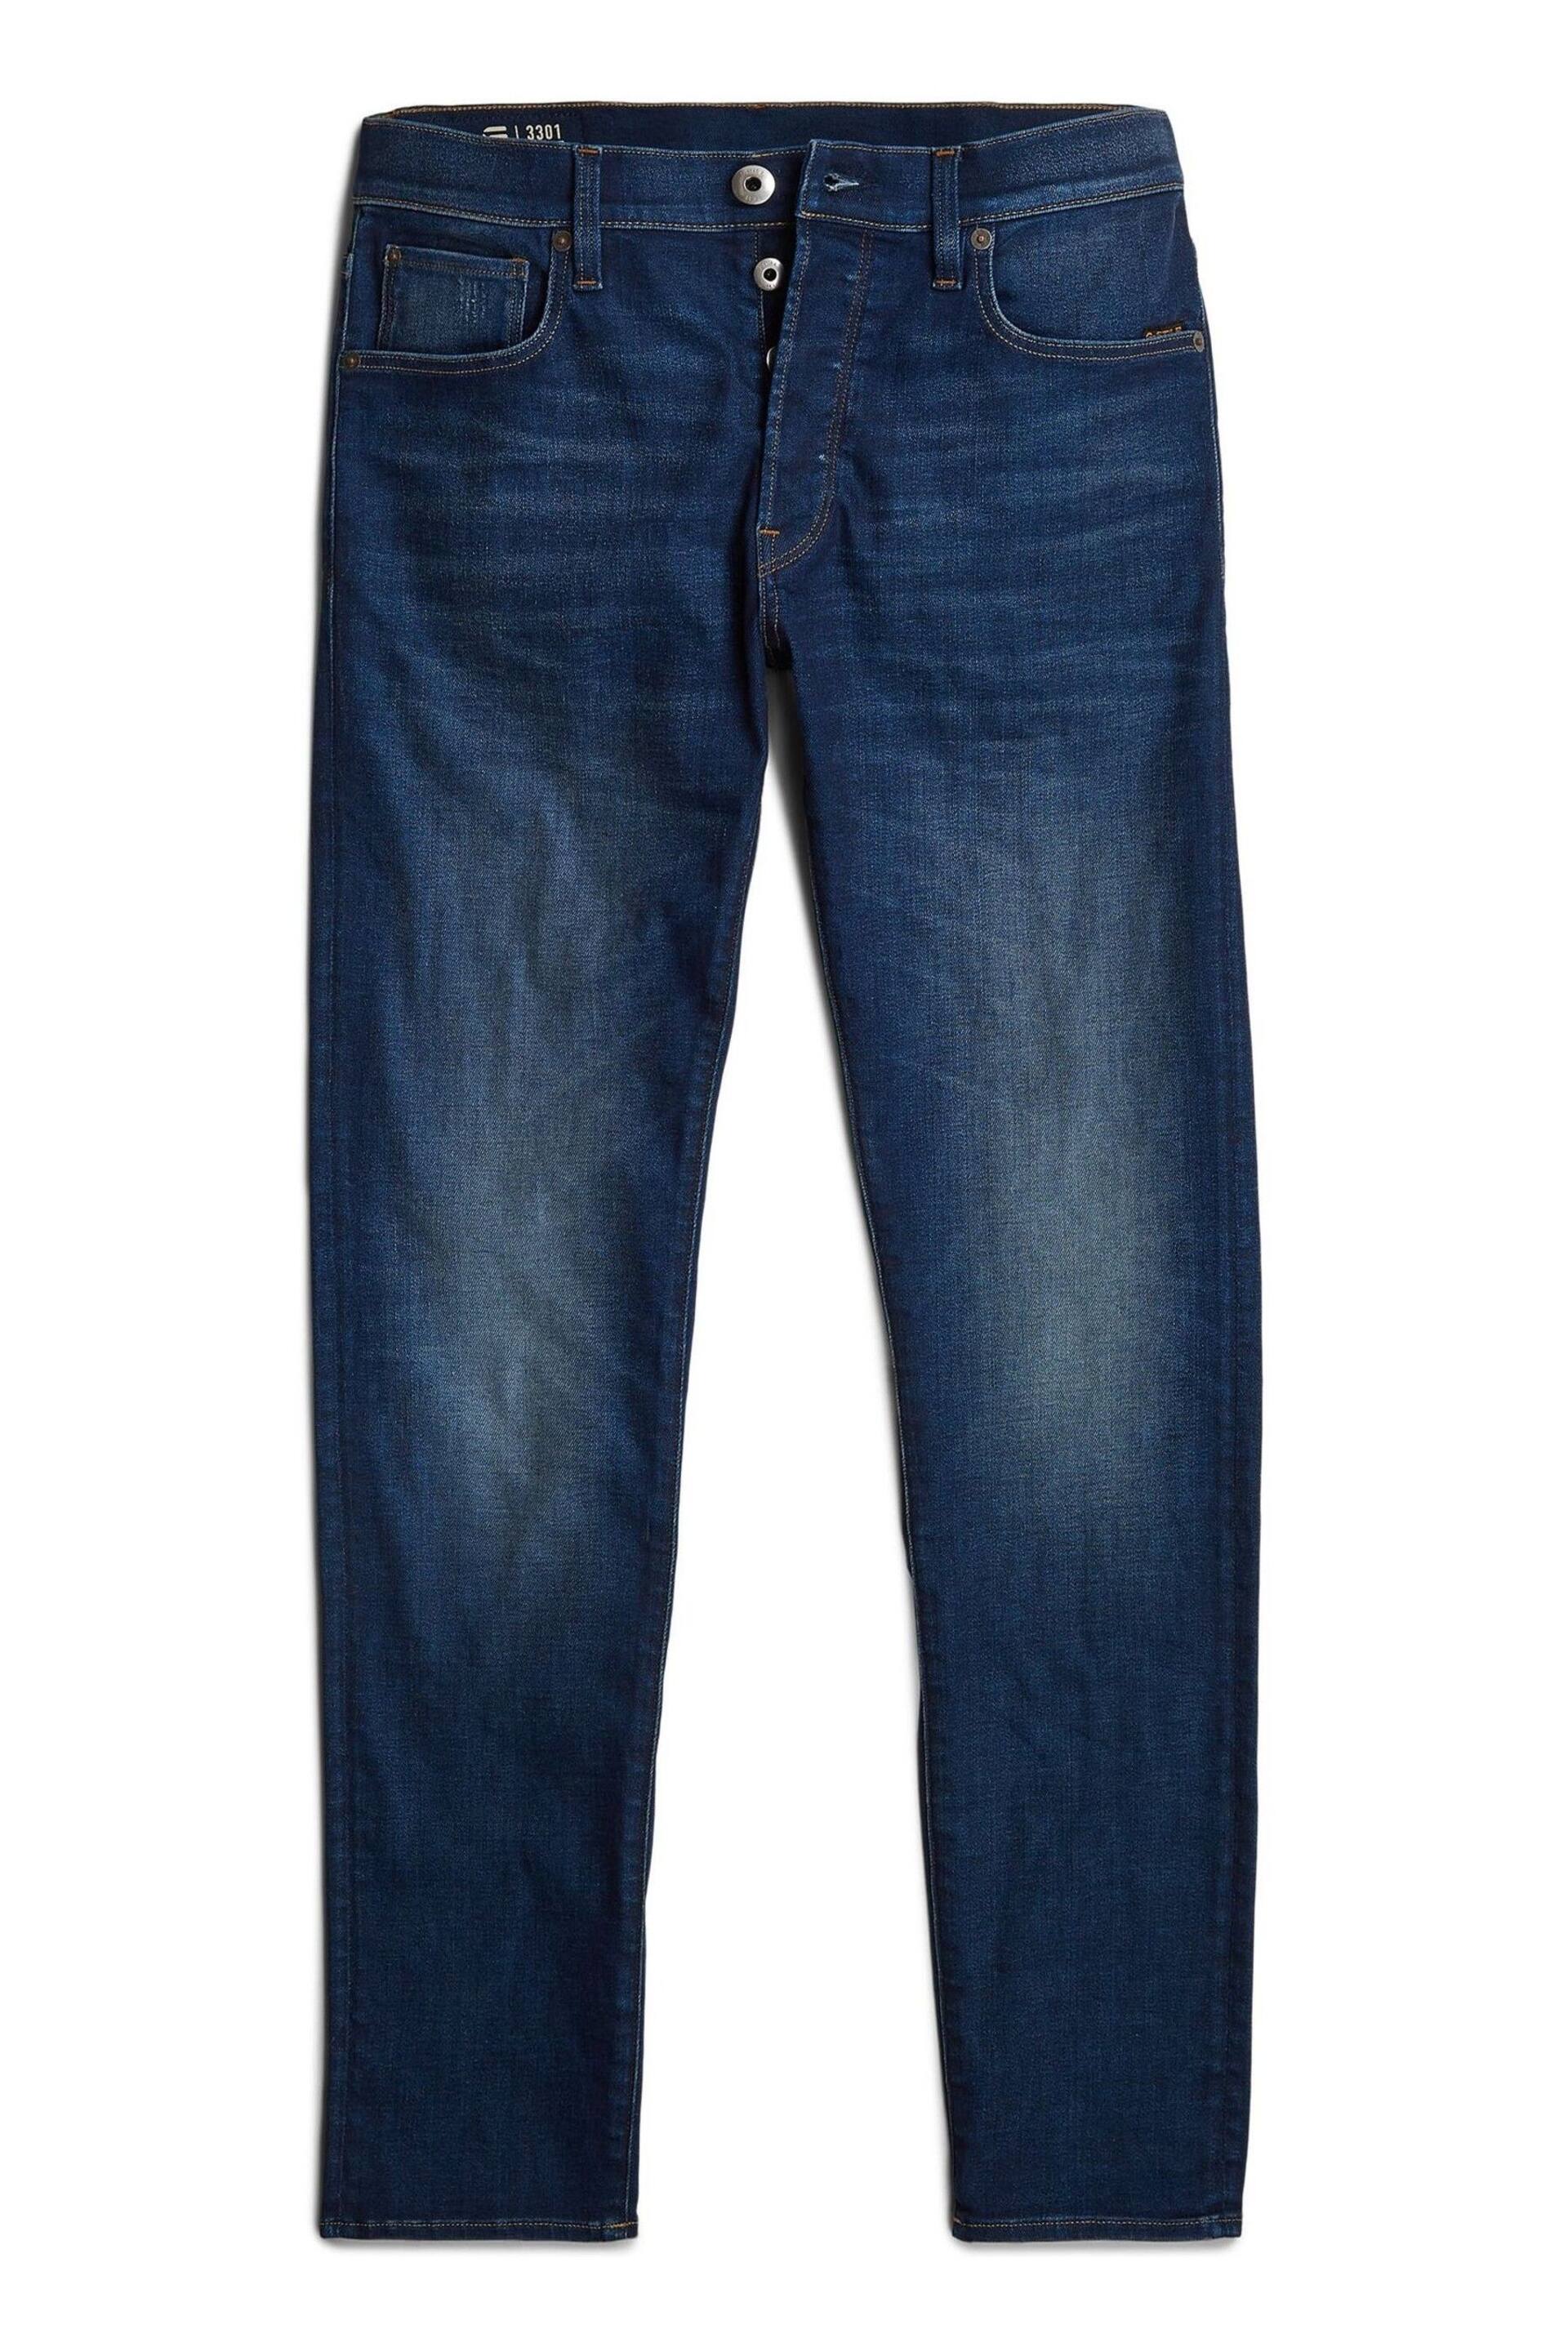 G Star Slim 3301 Jeans - Image 4 of 5